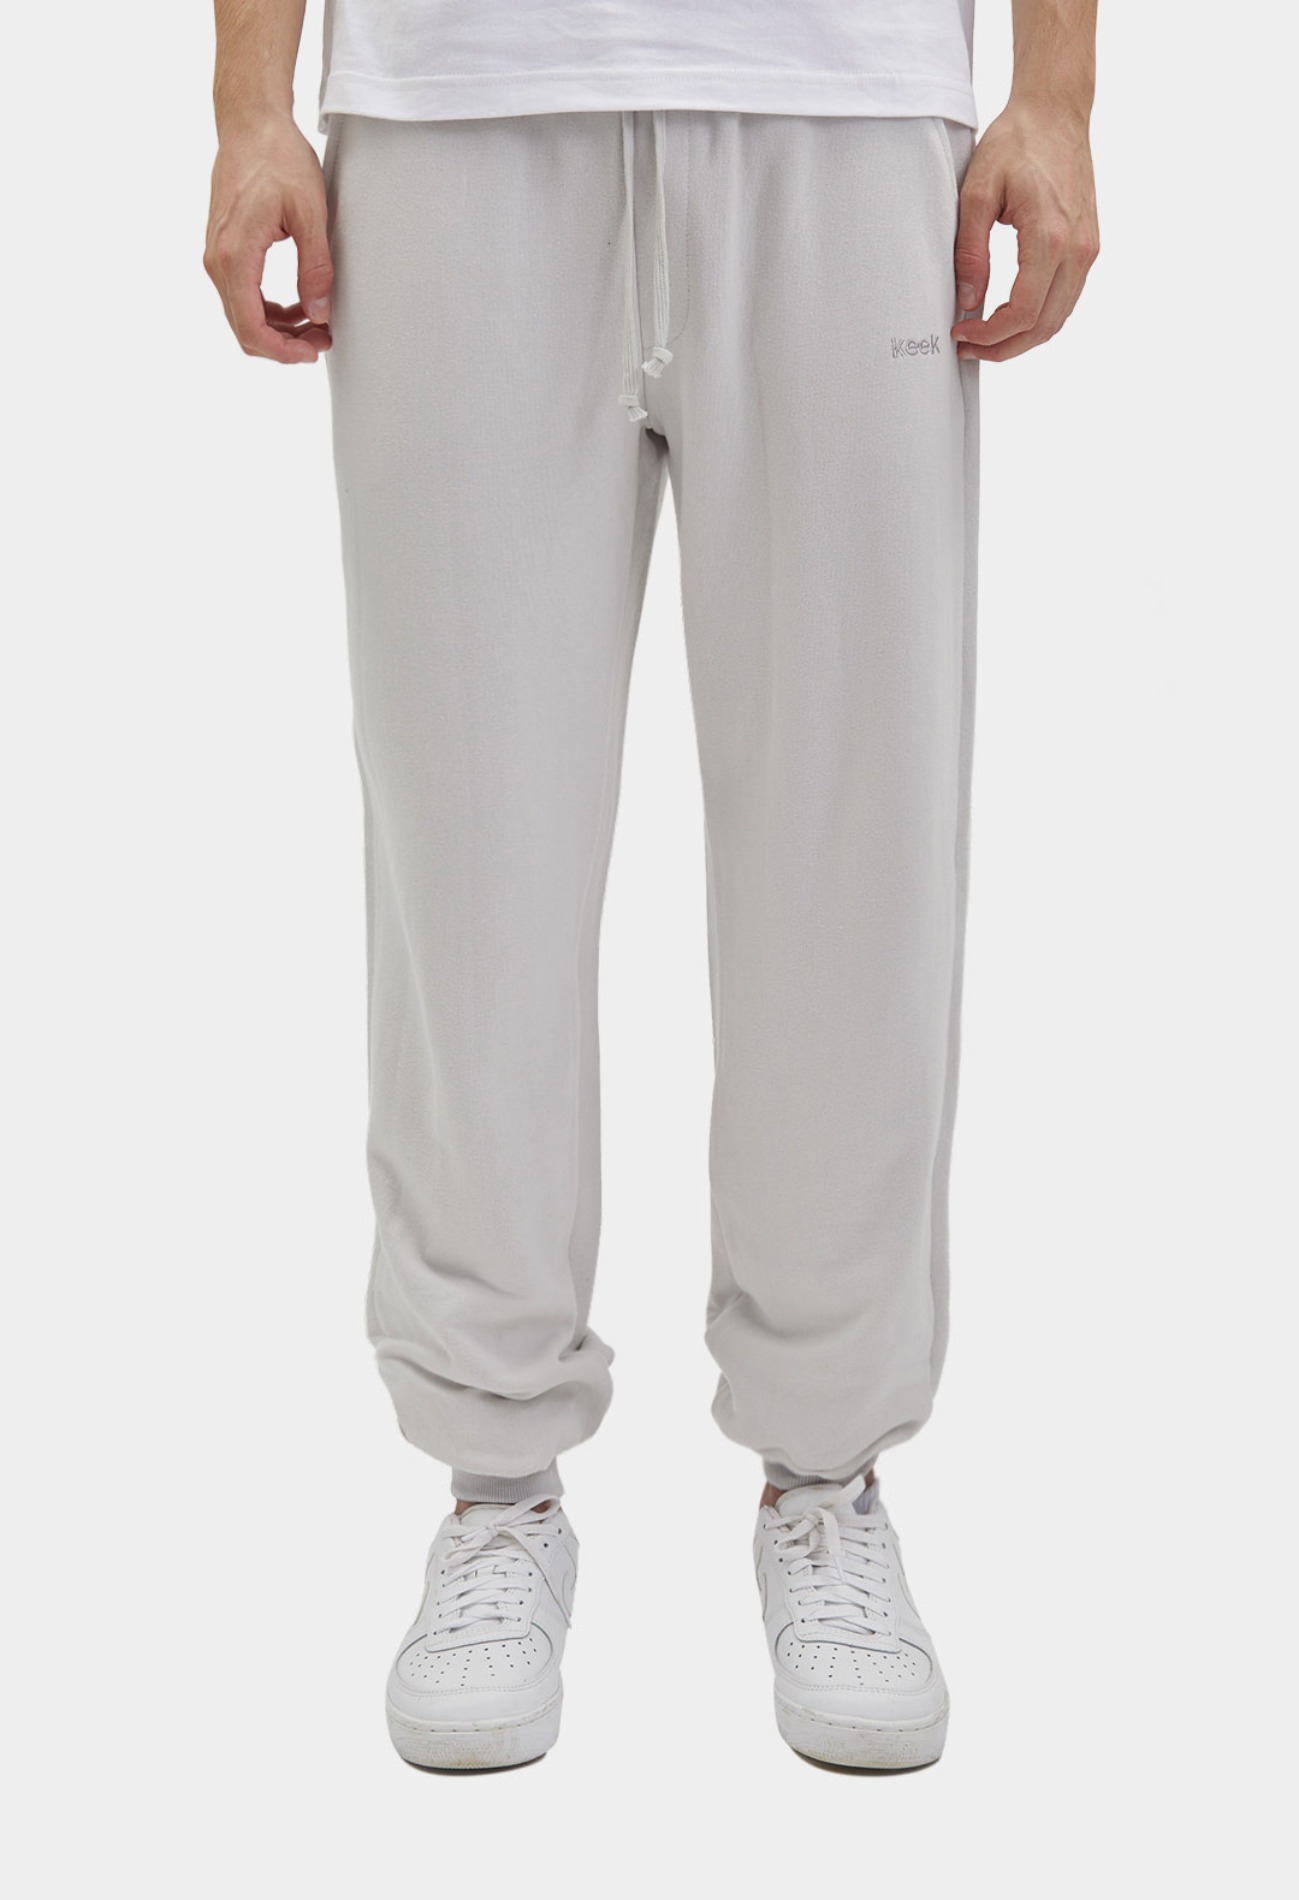 keek [Unisex] keek Sweat Pants - Light Gray 스트릿패션 유니섹스브랜드 커플시밀러룩 남자쇼핑몰 여성의류쇼핑몰 후드티 힙색